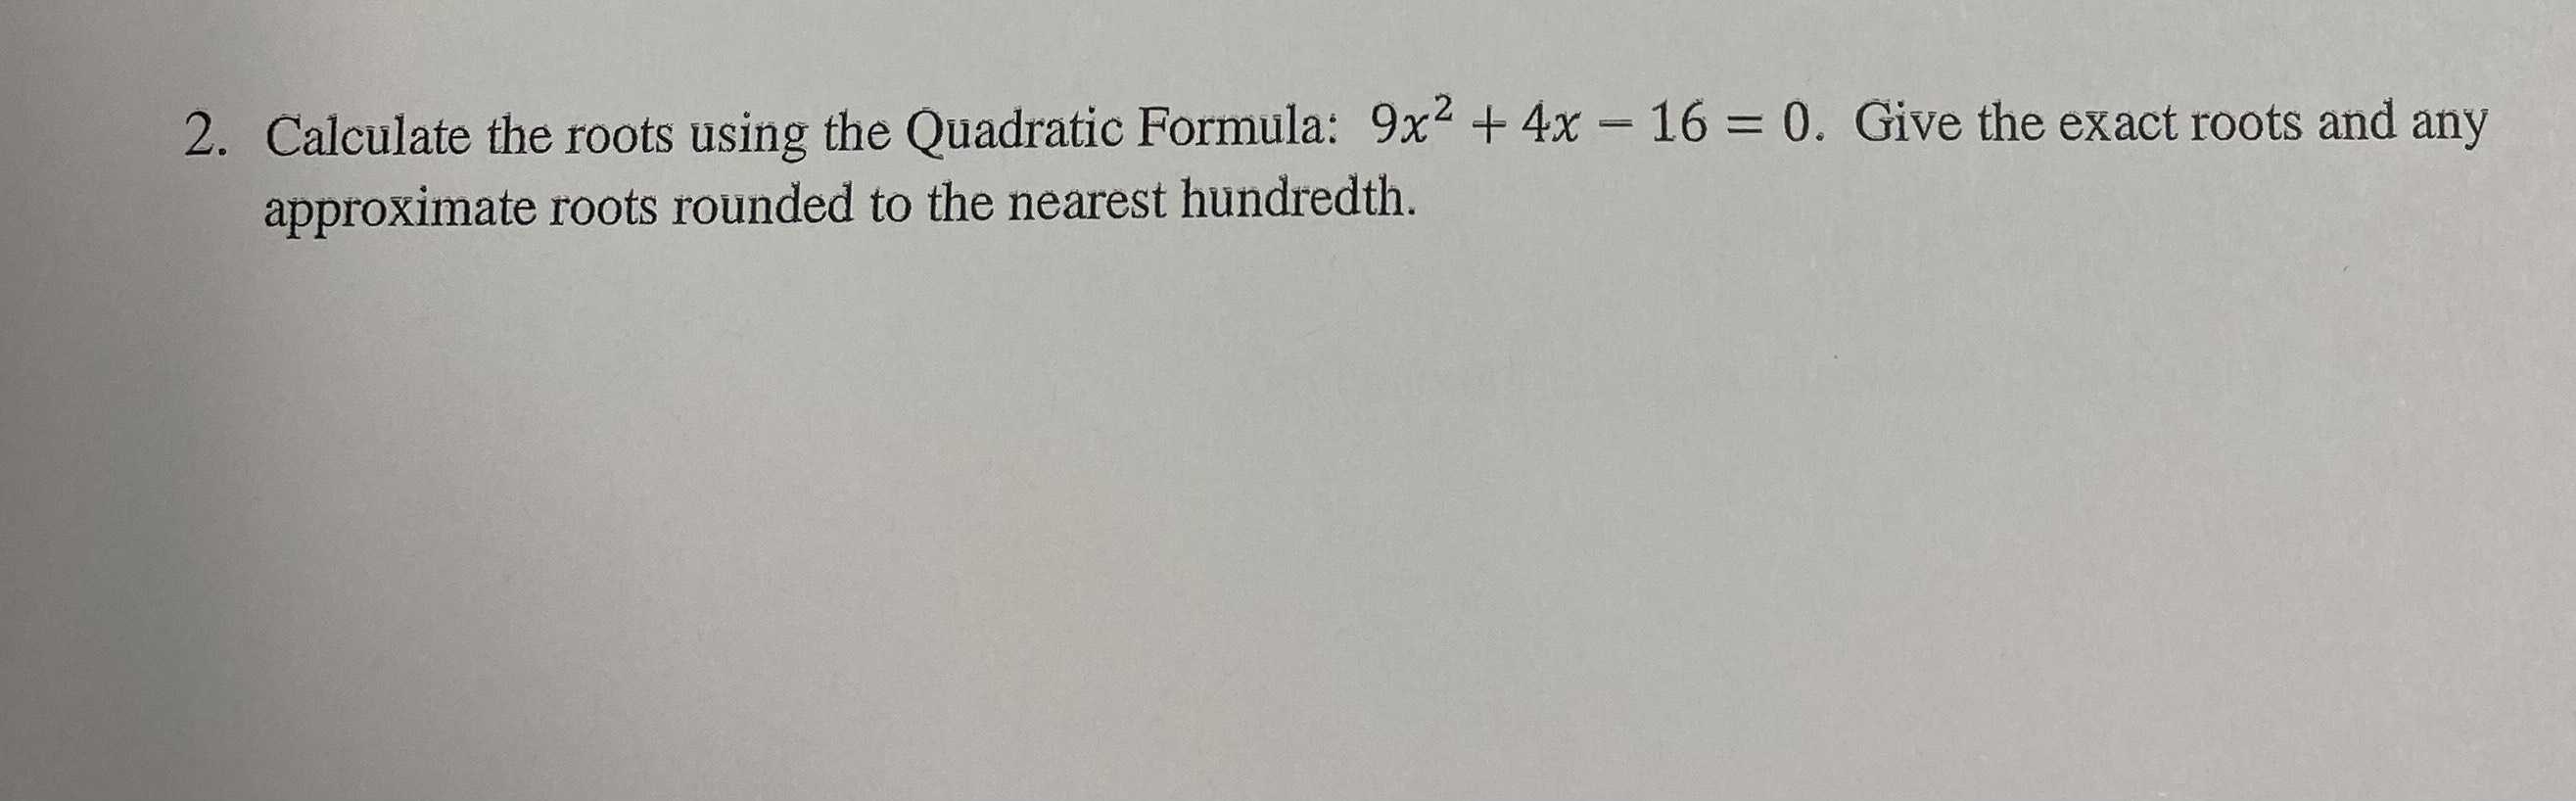 2. Calculate the roots using the Quadratic Formula...